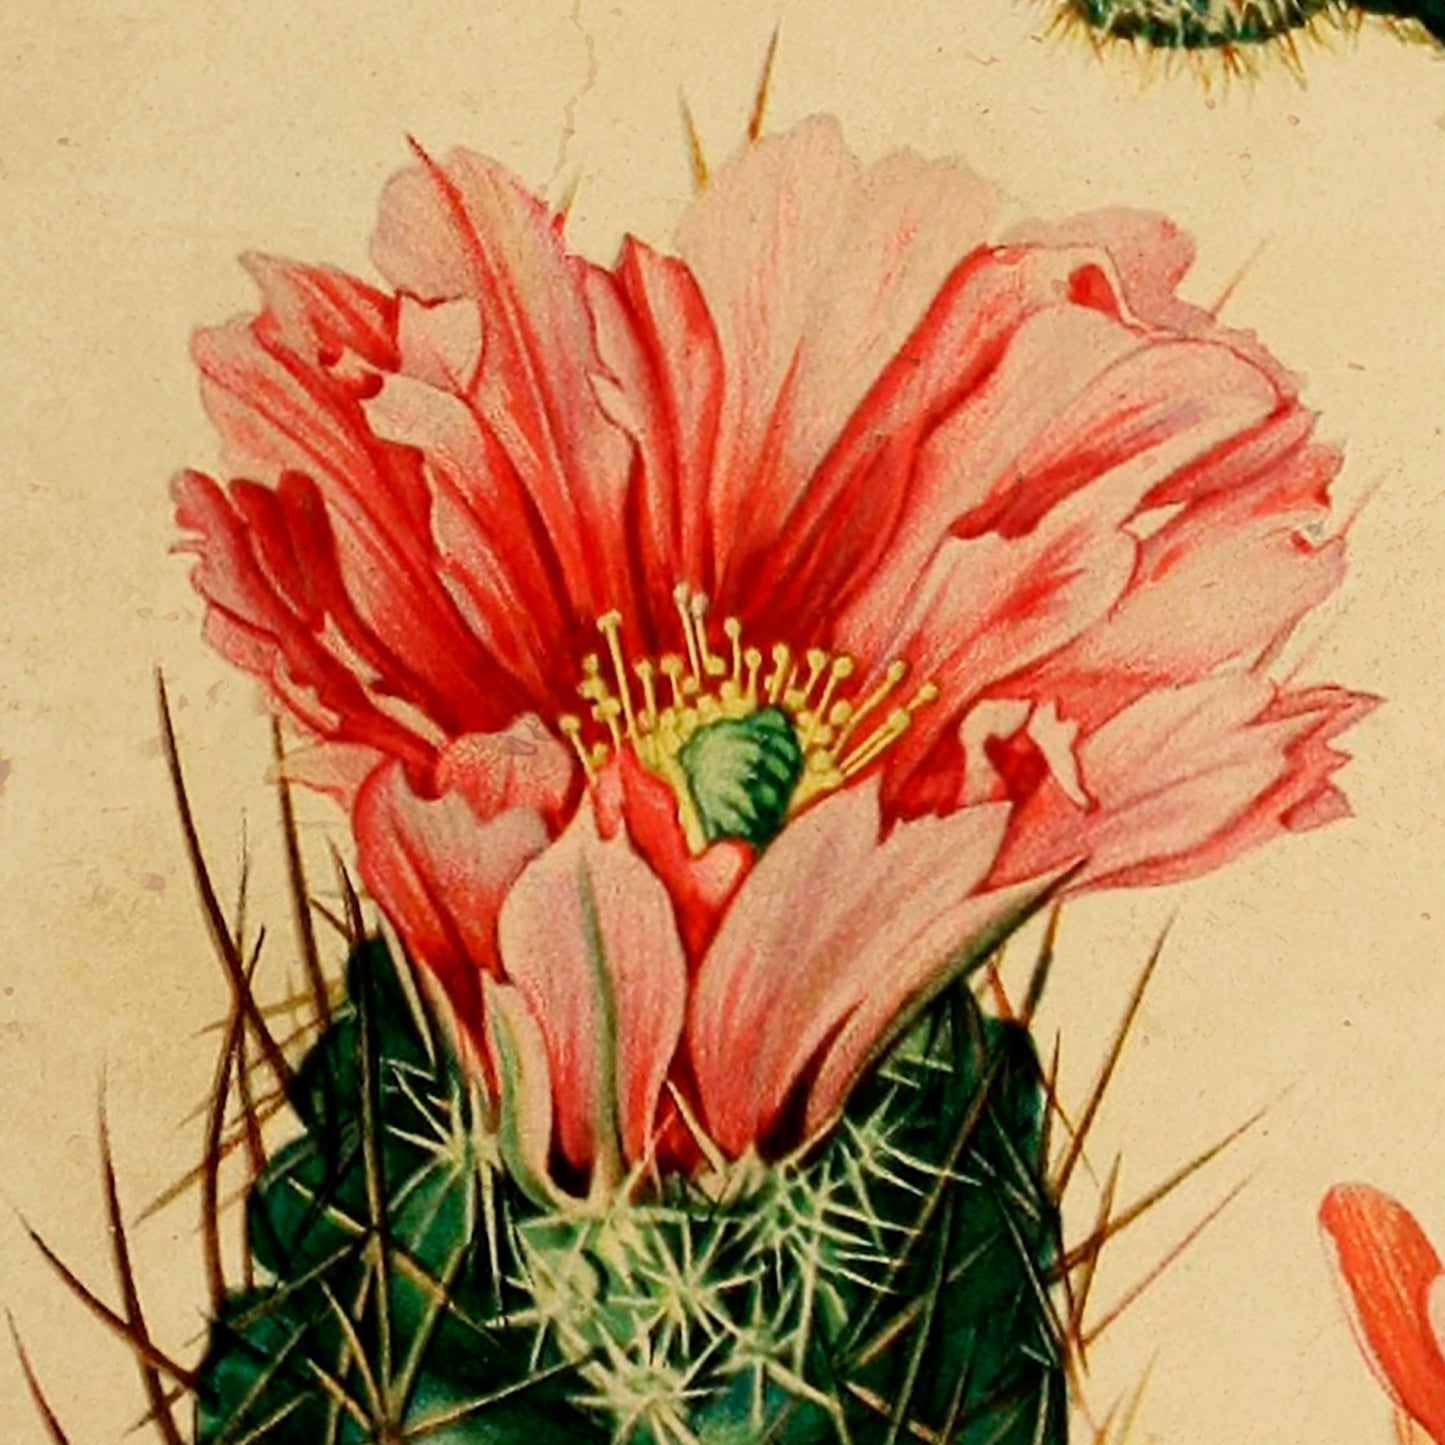 Pink flowering Cactaceae Botanical Poster